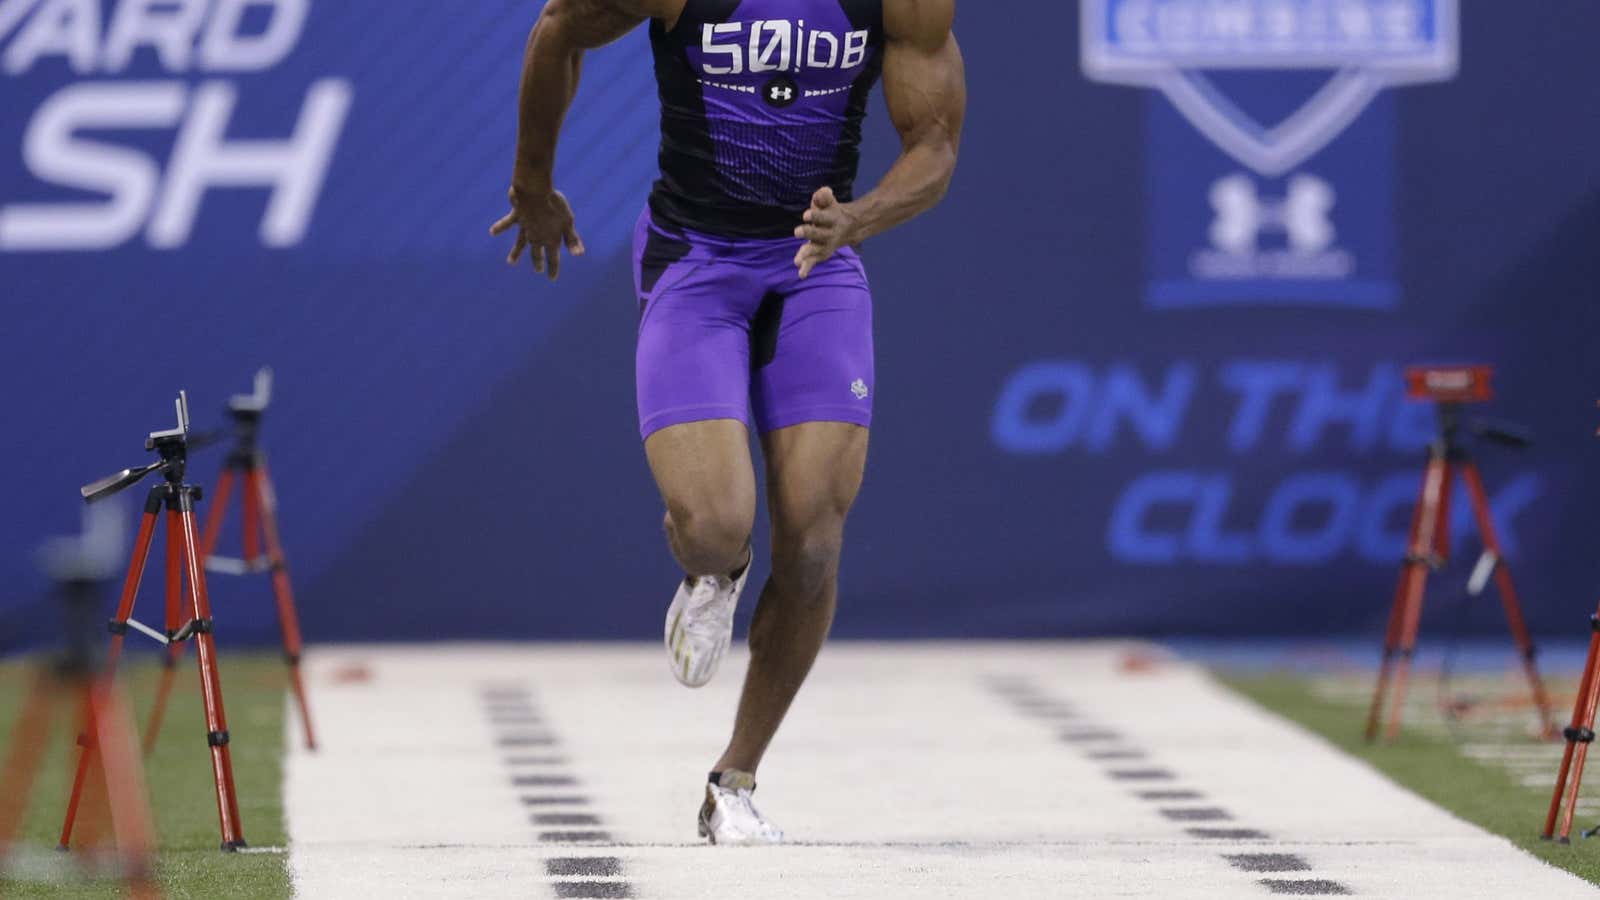 Prospect Trae Waynes running a 40-yard dash worth $100k at the NFL Combine.